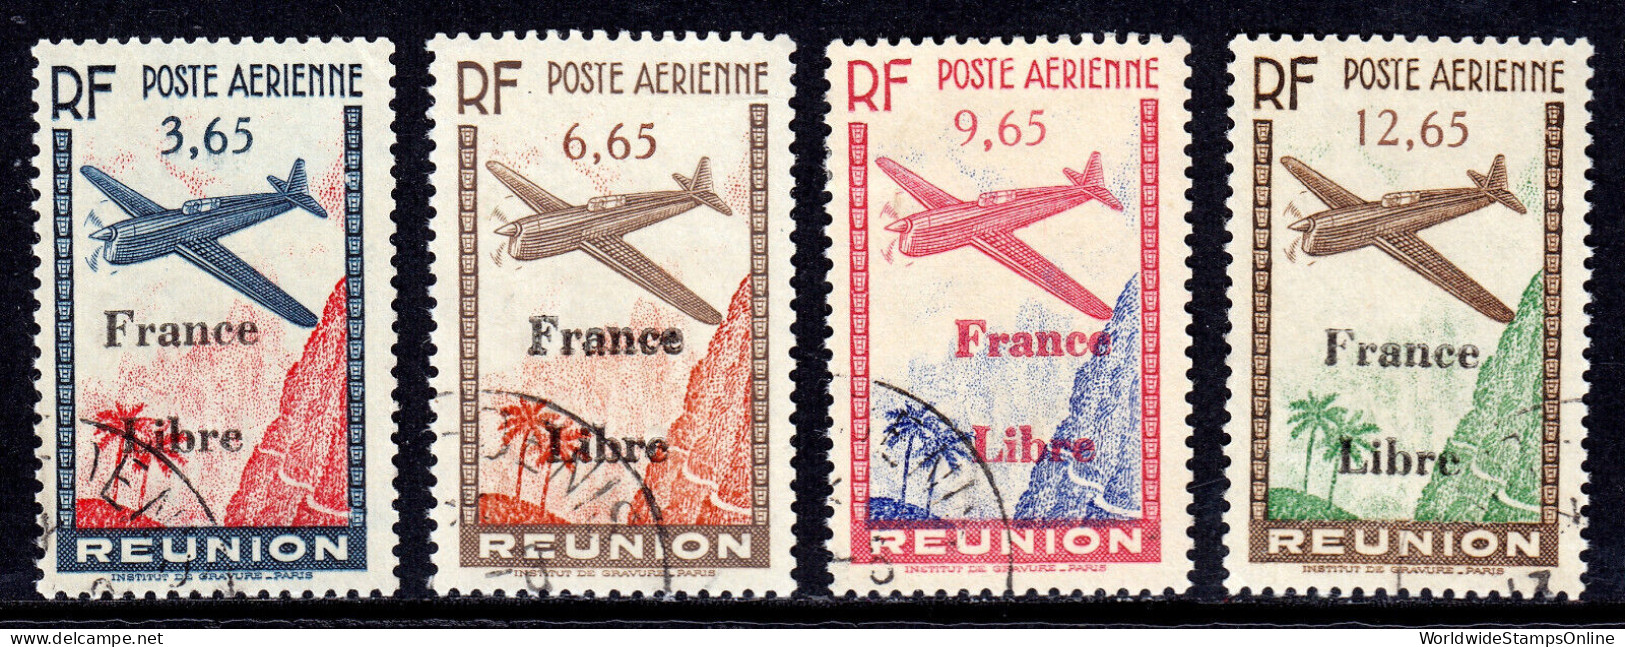 FRANCE (REUNION) — SCOTT C14-C17 — 1943 FRANCE LIBRE AIRMAIL SET— USED — SCV $22 - Aéreo